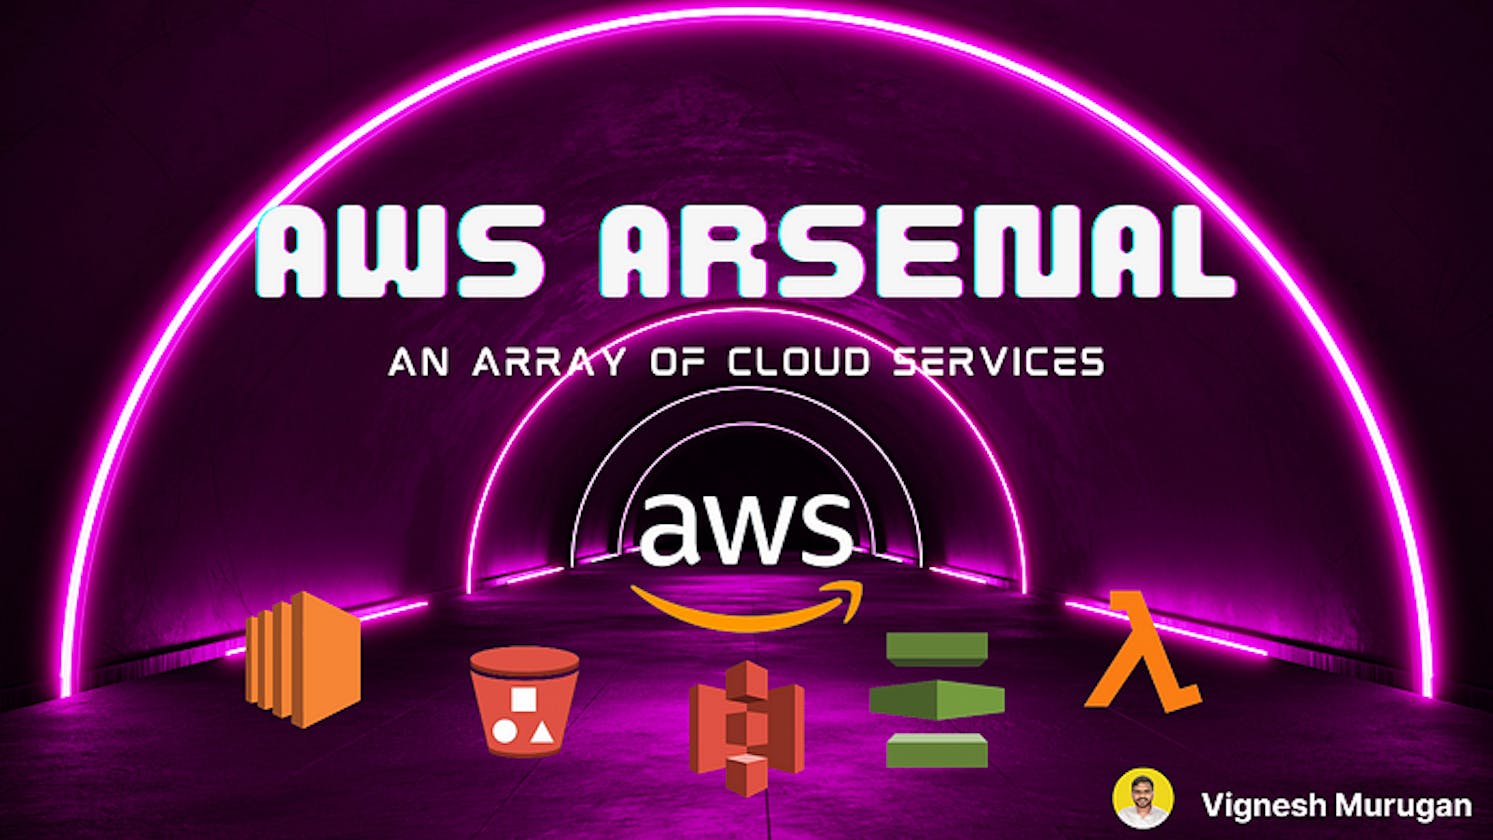 AWS Arsenal: An array of Cloud Services